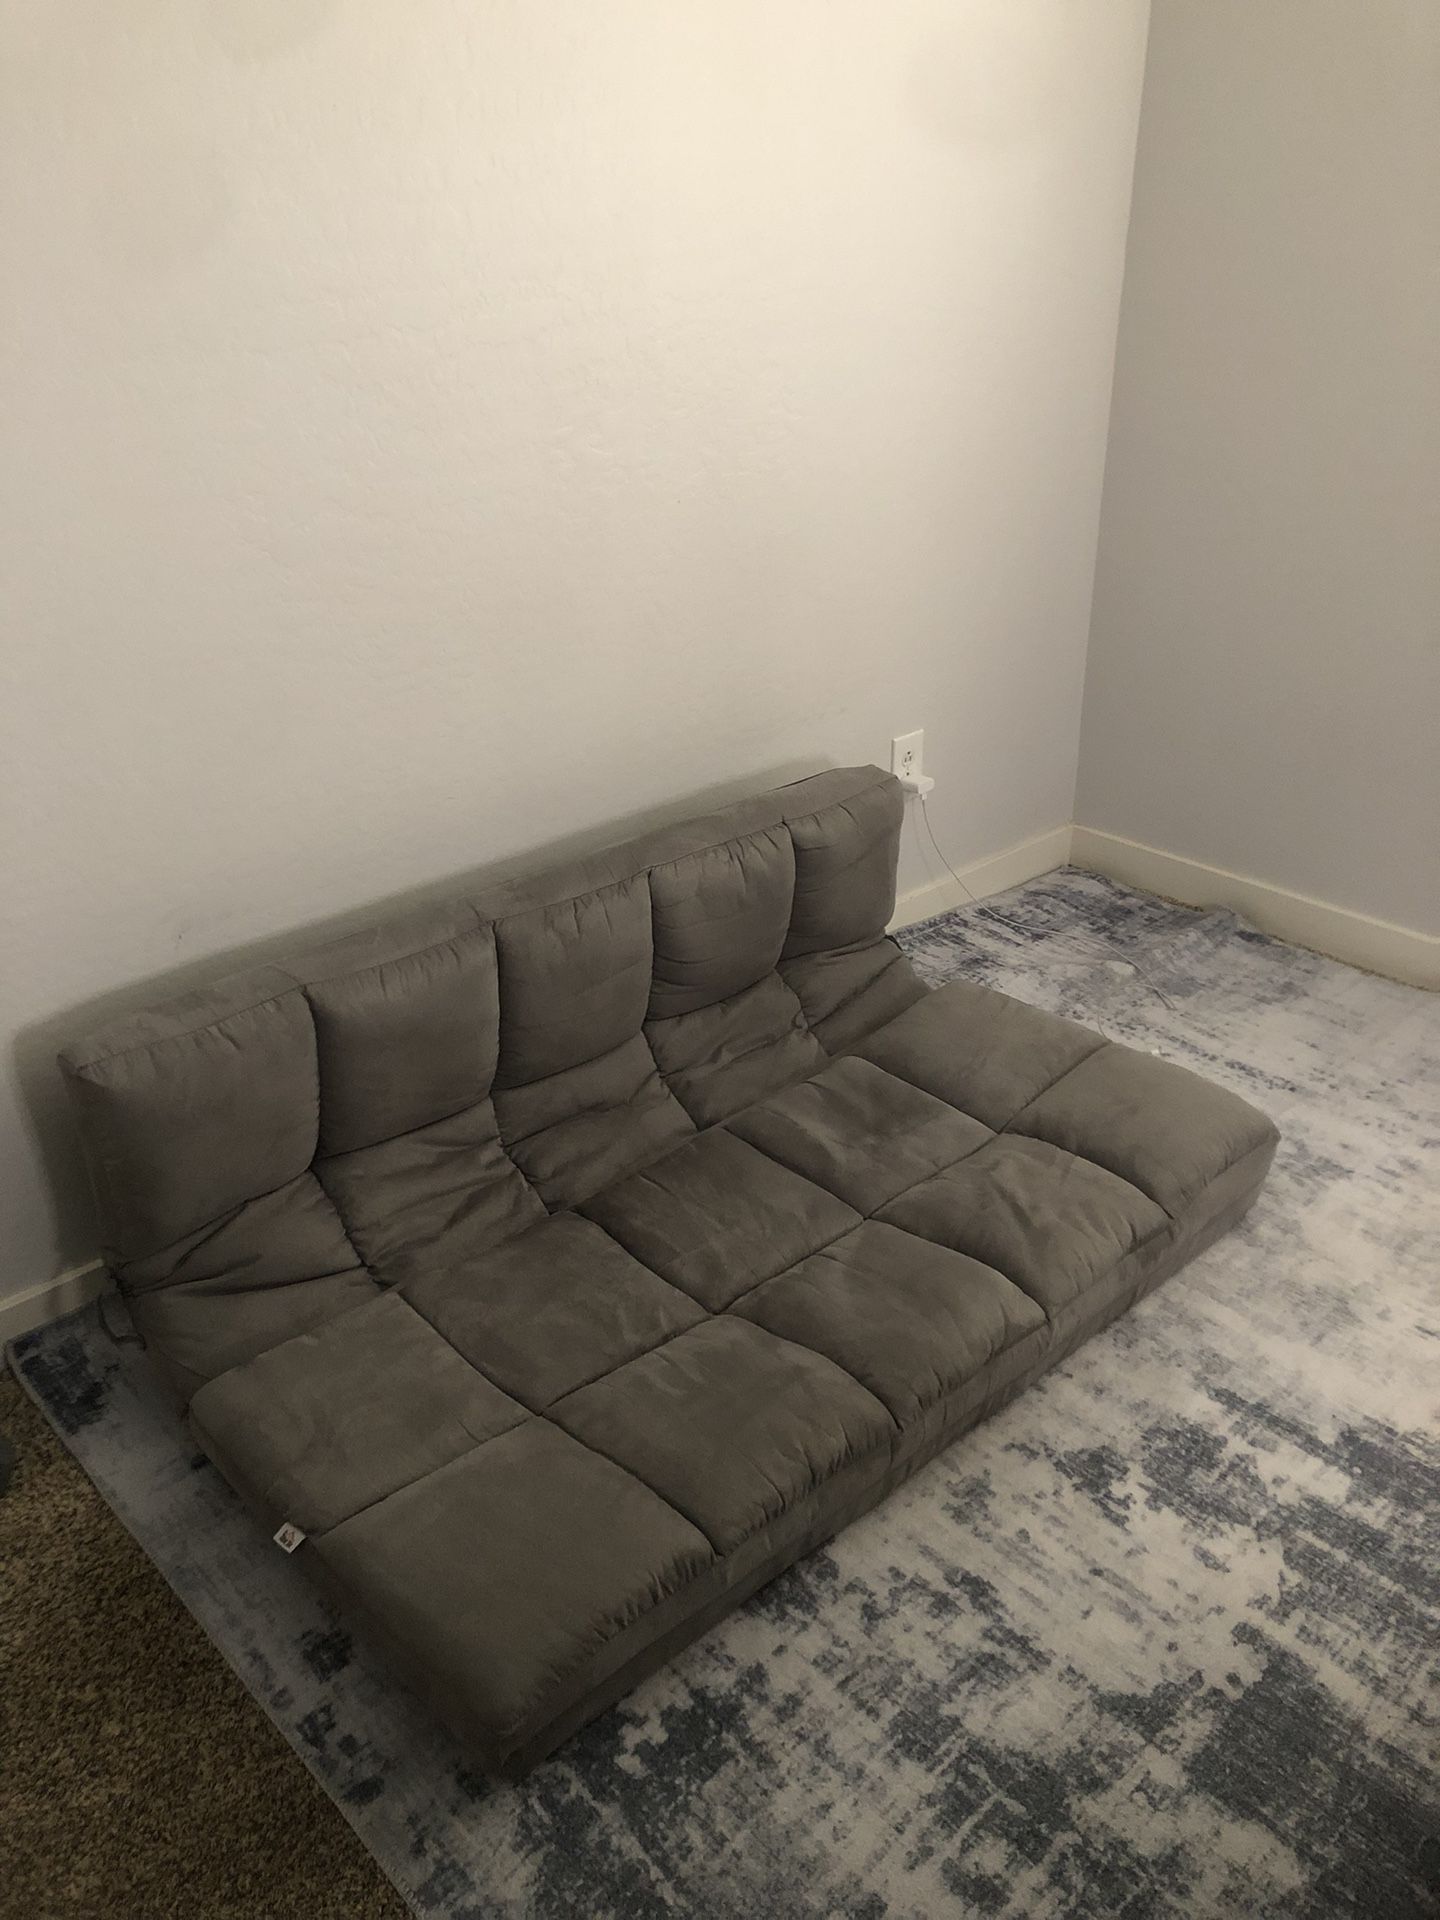 Floor Couch  Mattress